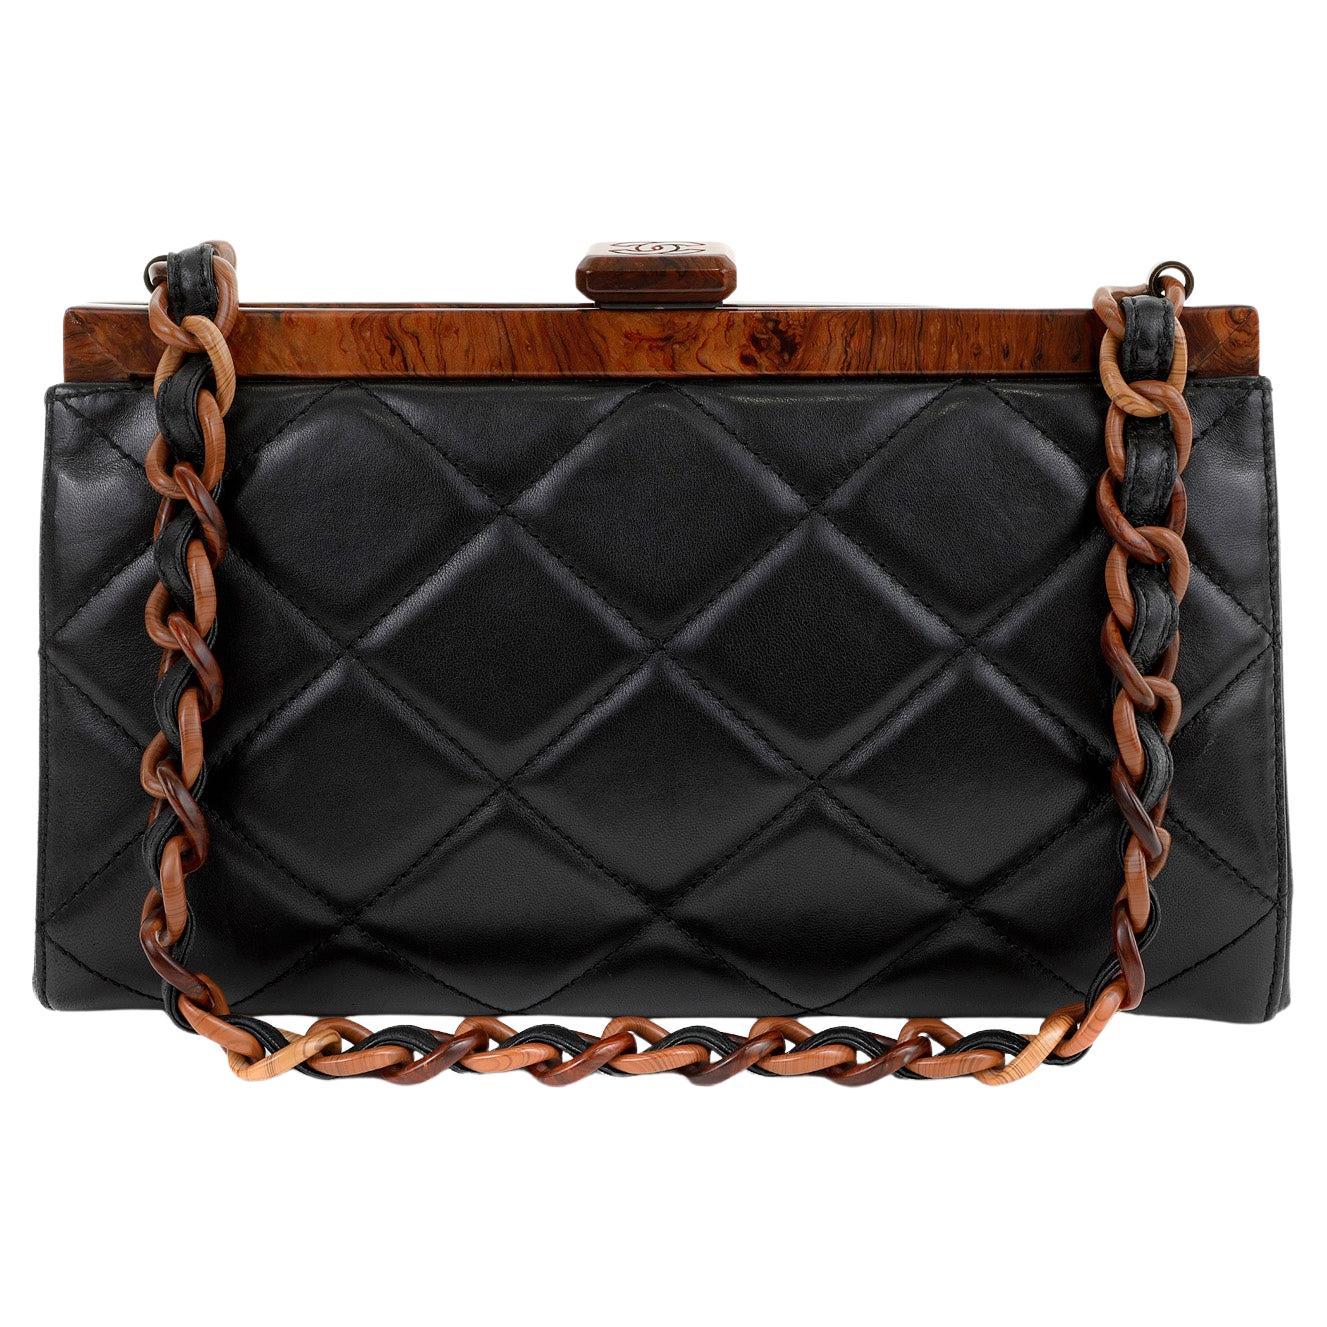 Chanel Black Quilted Leather Wood Framed Bag